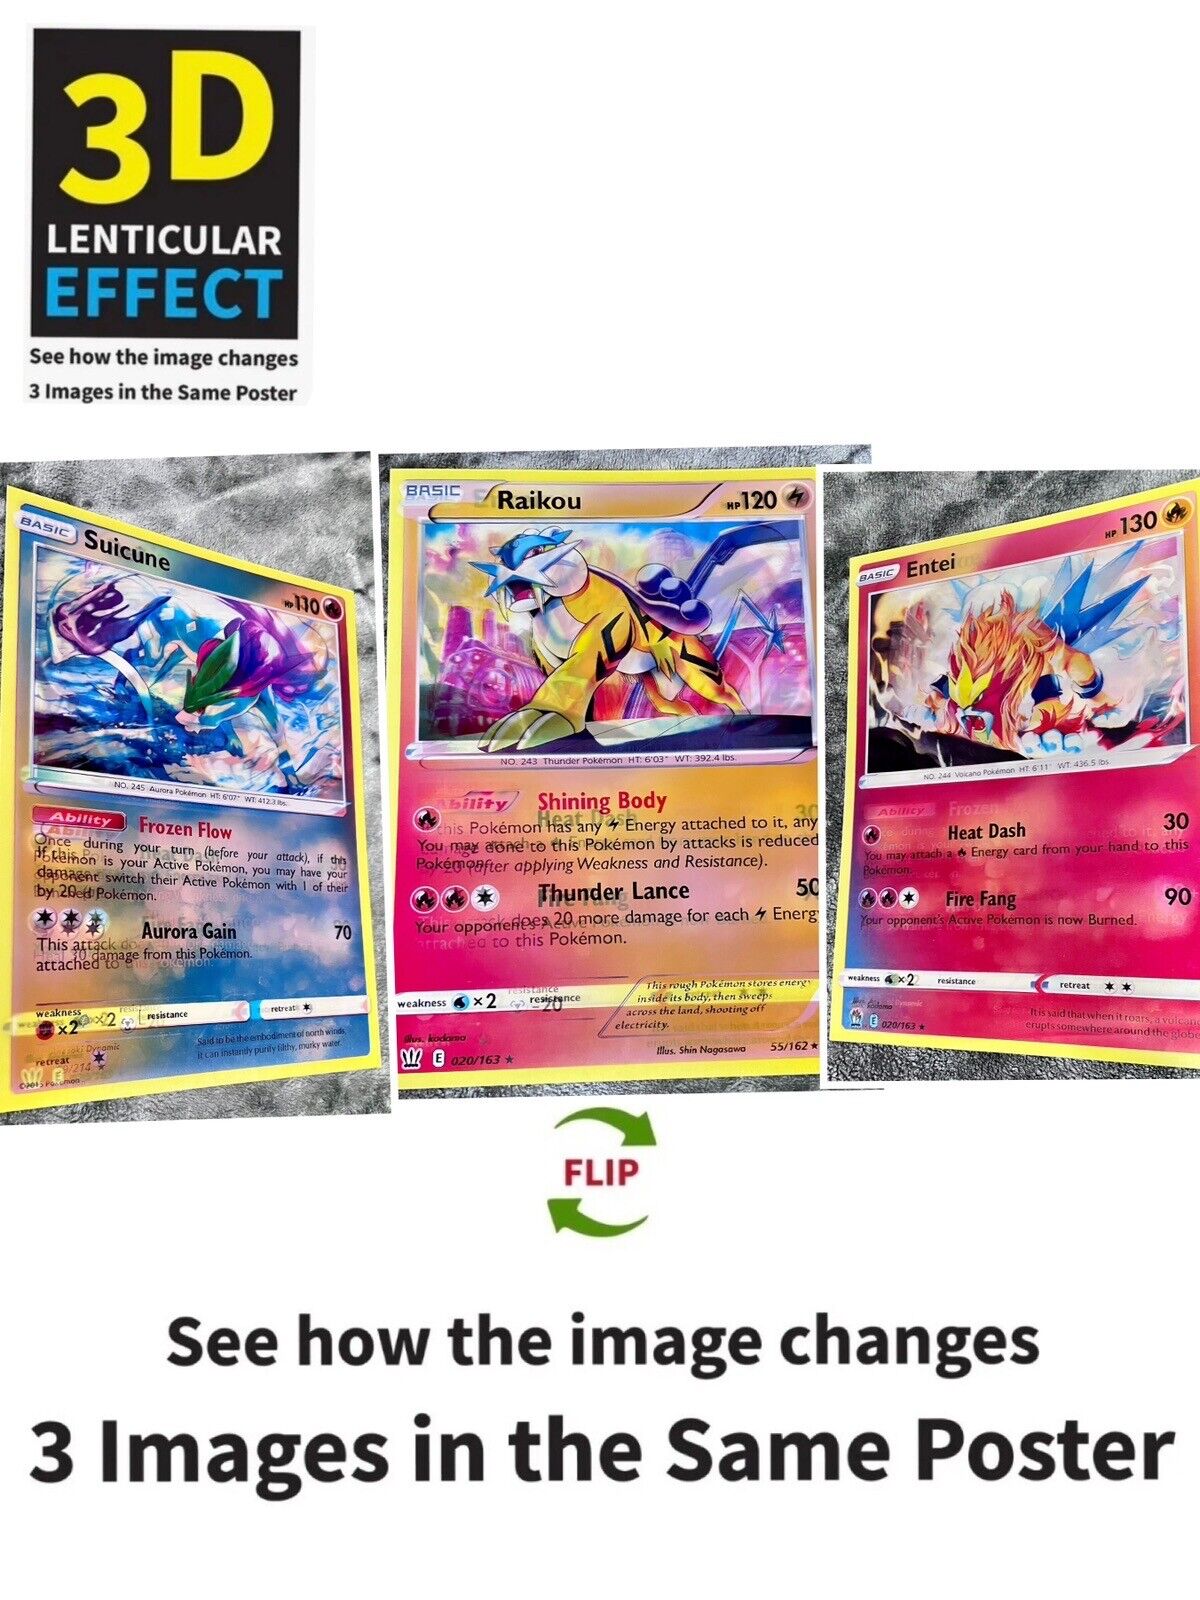 Pokémon-Raikou,Entei,Suicune 3D Poster 3D Lenticular Flip Effect,3 In One